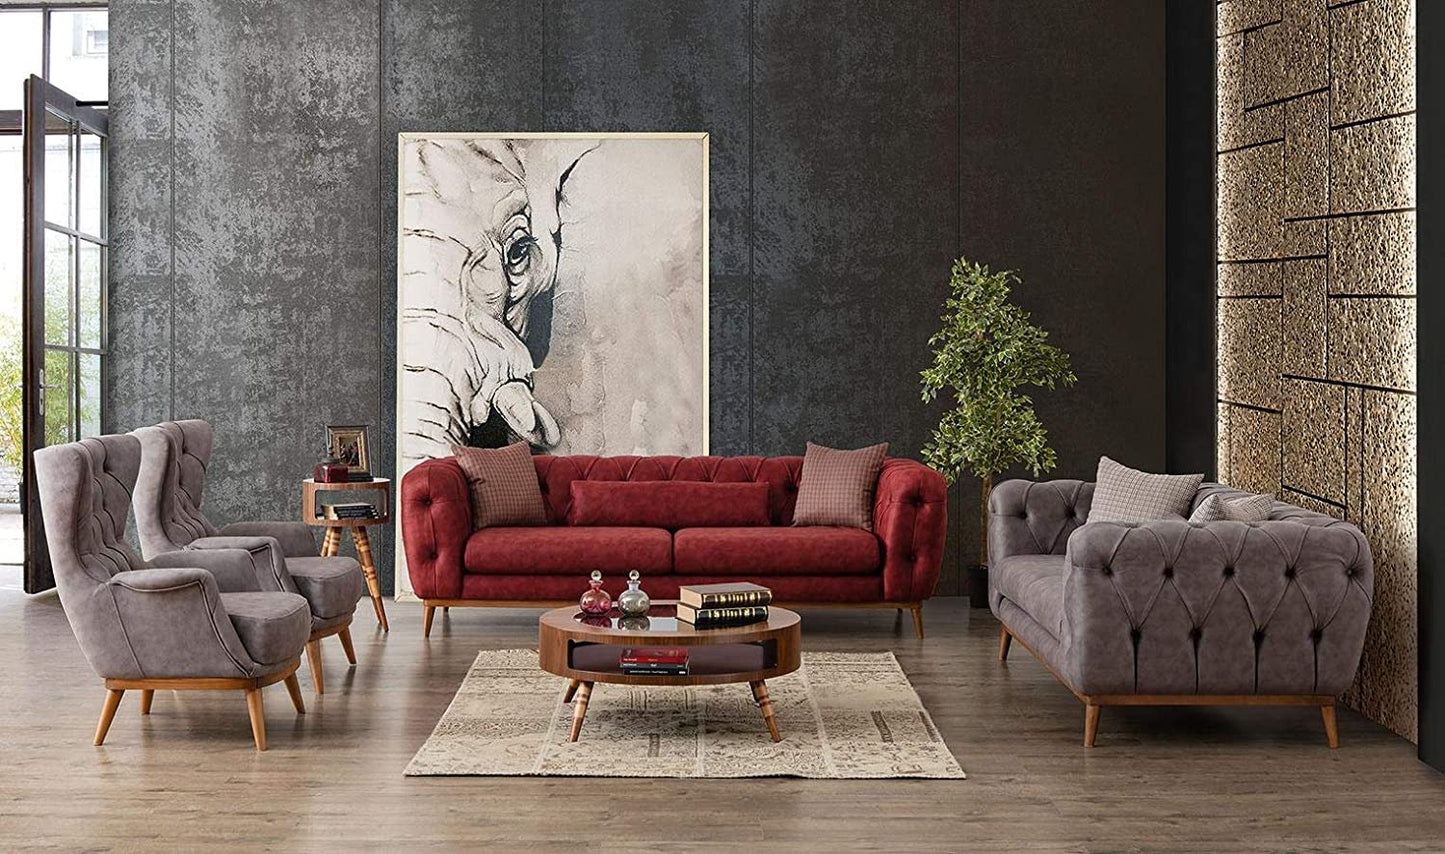 Designer Sofa Set:- Fortune 2+2+ 2 Wing Chair Fabric 6 Seater Luxury Furniture Sofa Set (Red & Grey)